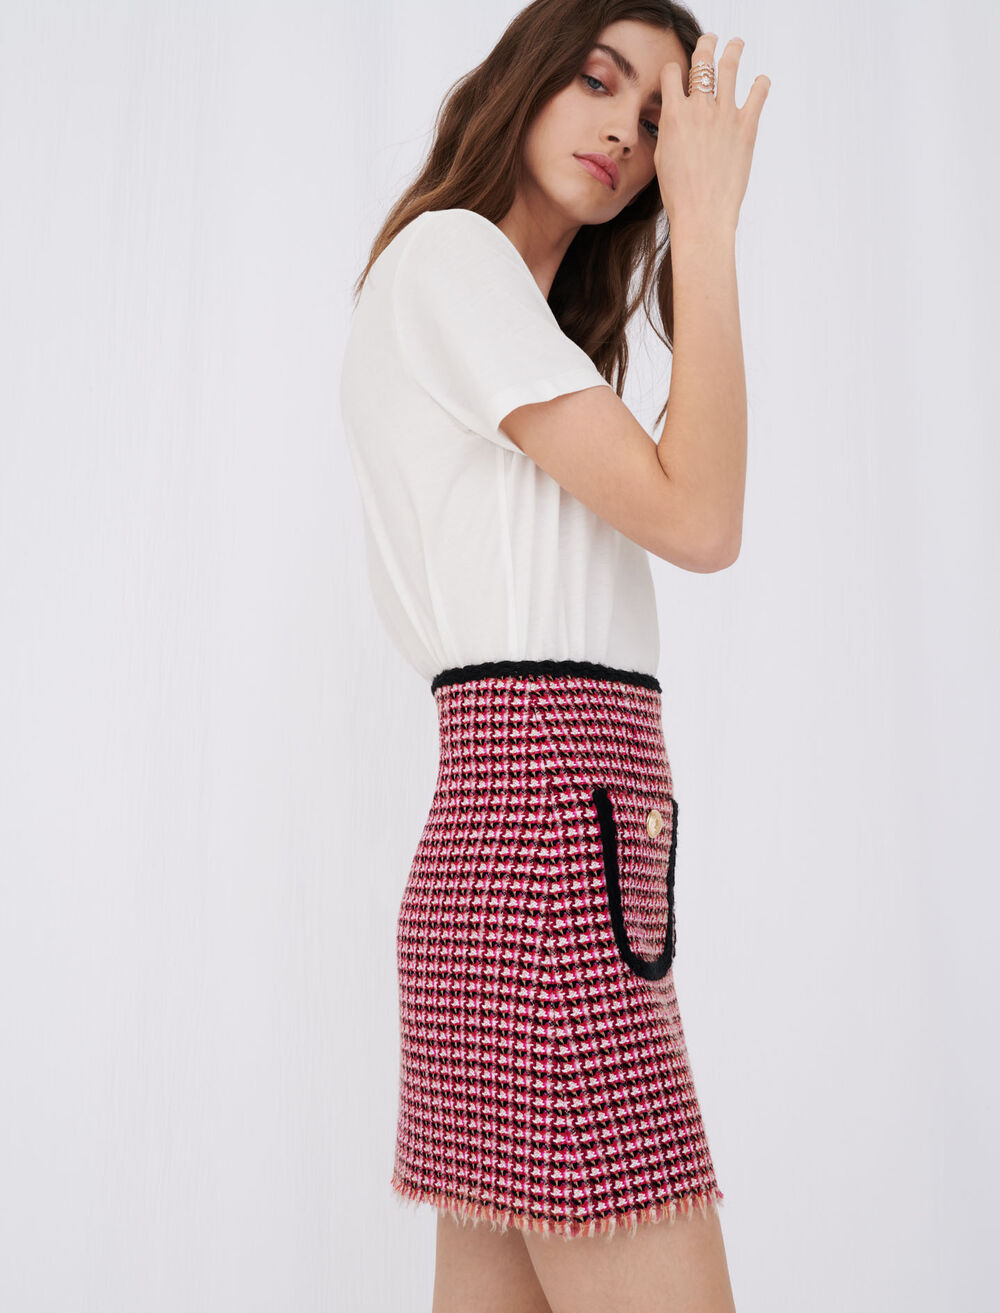 120JENALT Straight skirt in contrast tweed - Skirts & Shorts - Maje.com